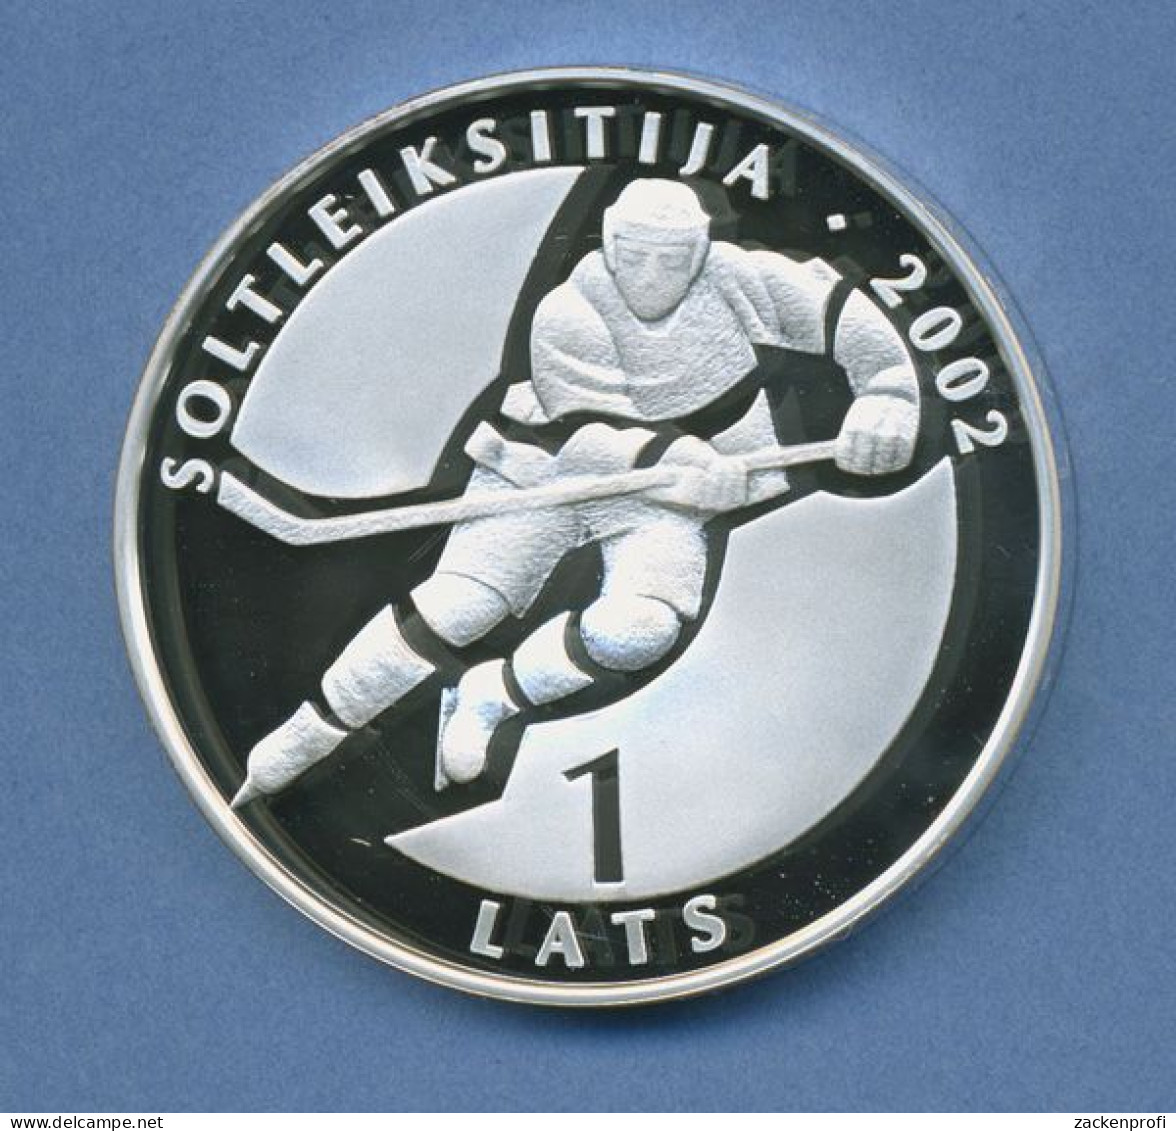 Lettland 1 Lats 2001, Silber, Eishockey, KM 50 PP (m4227) - Latvia